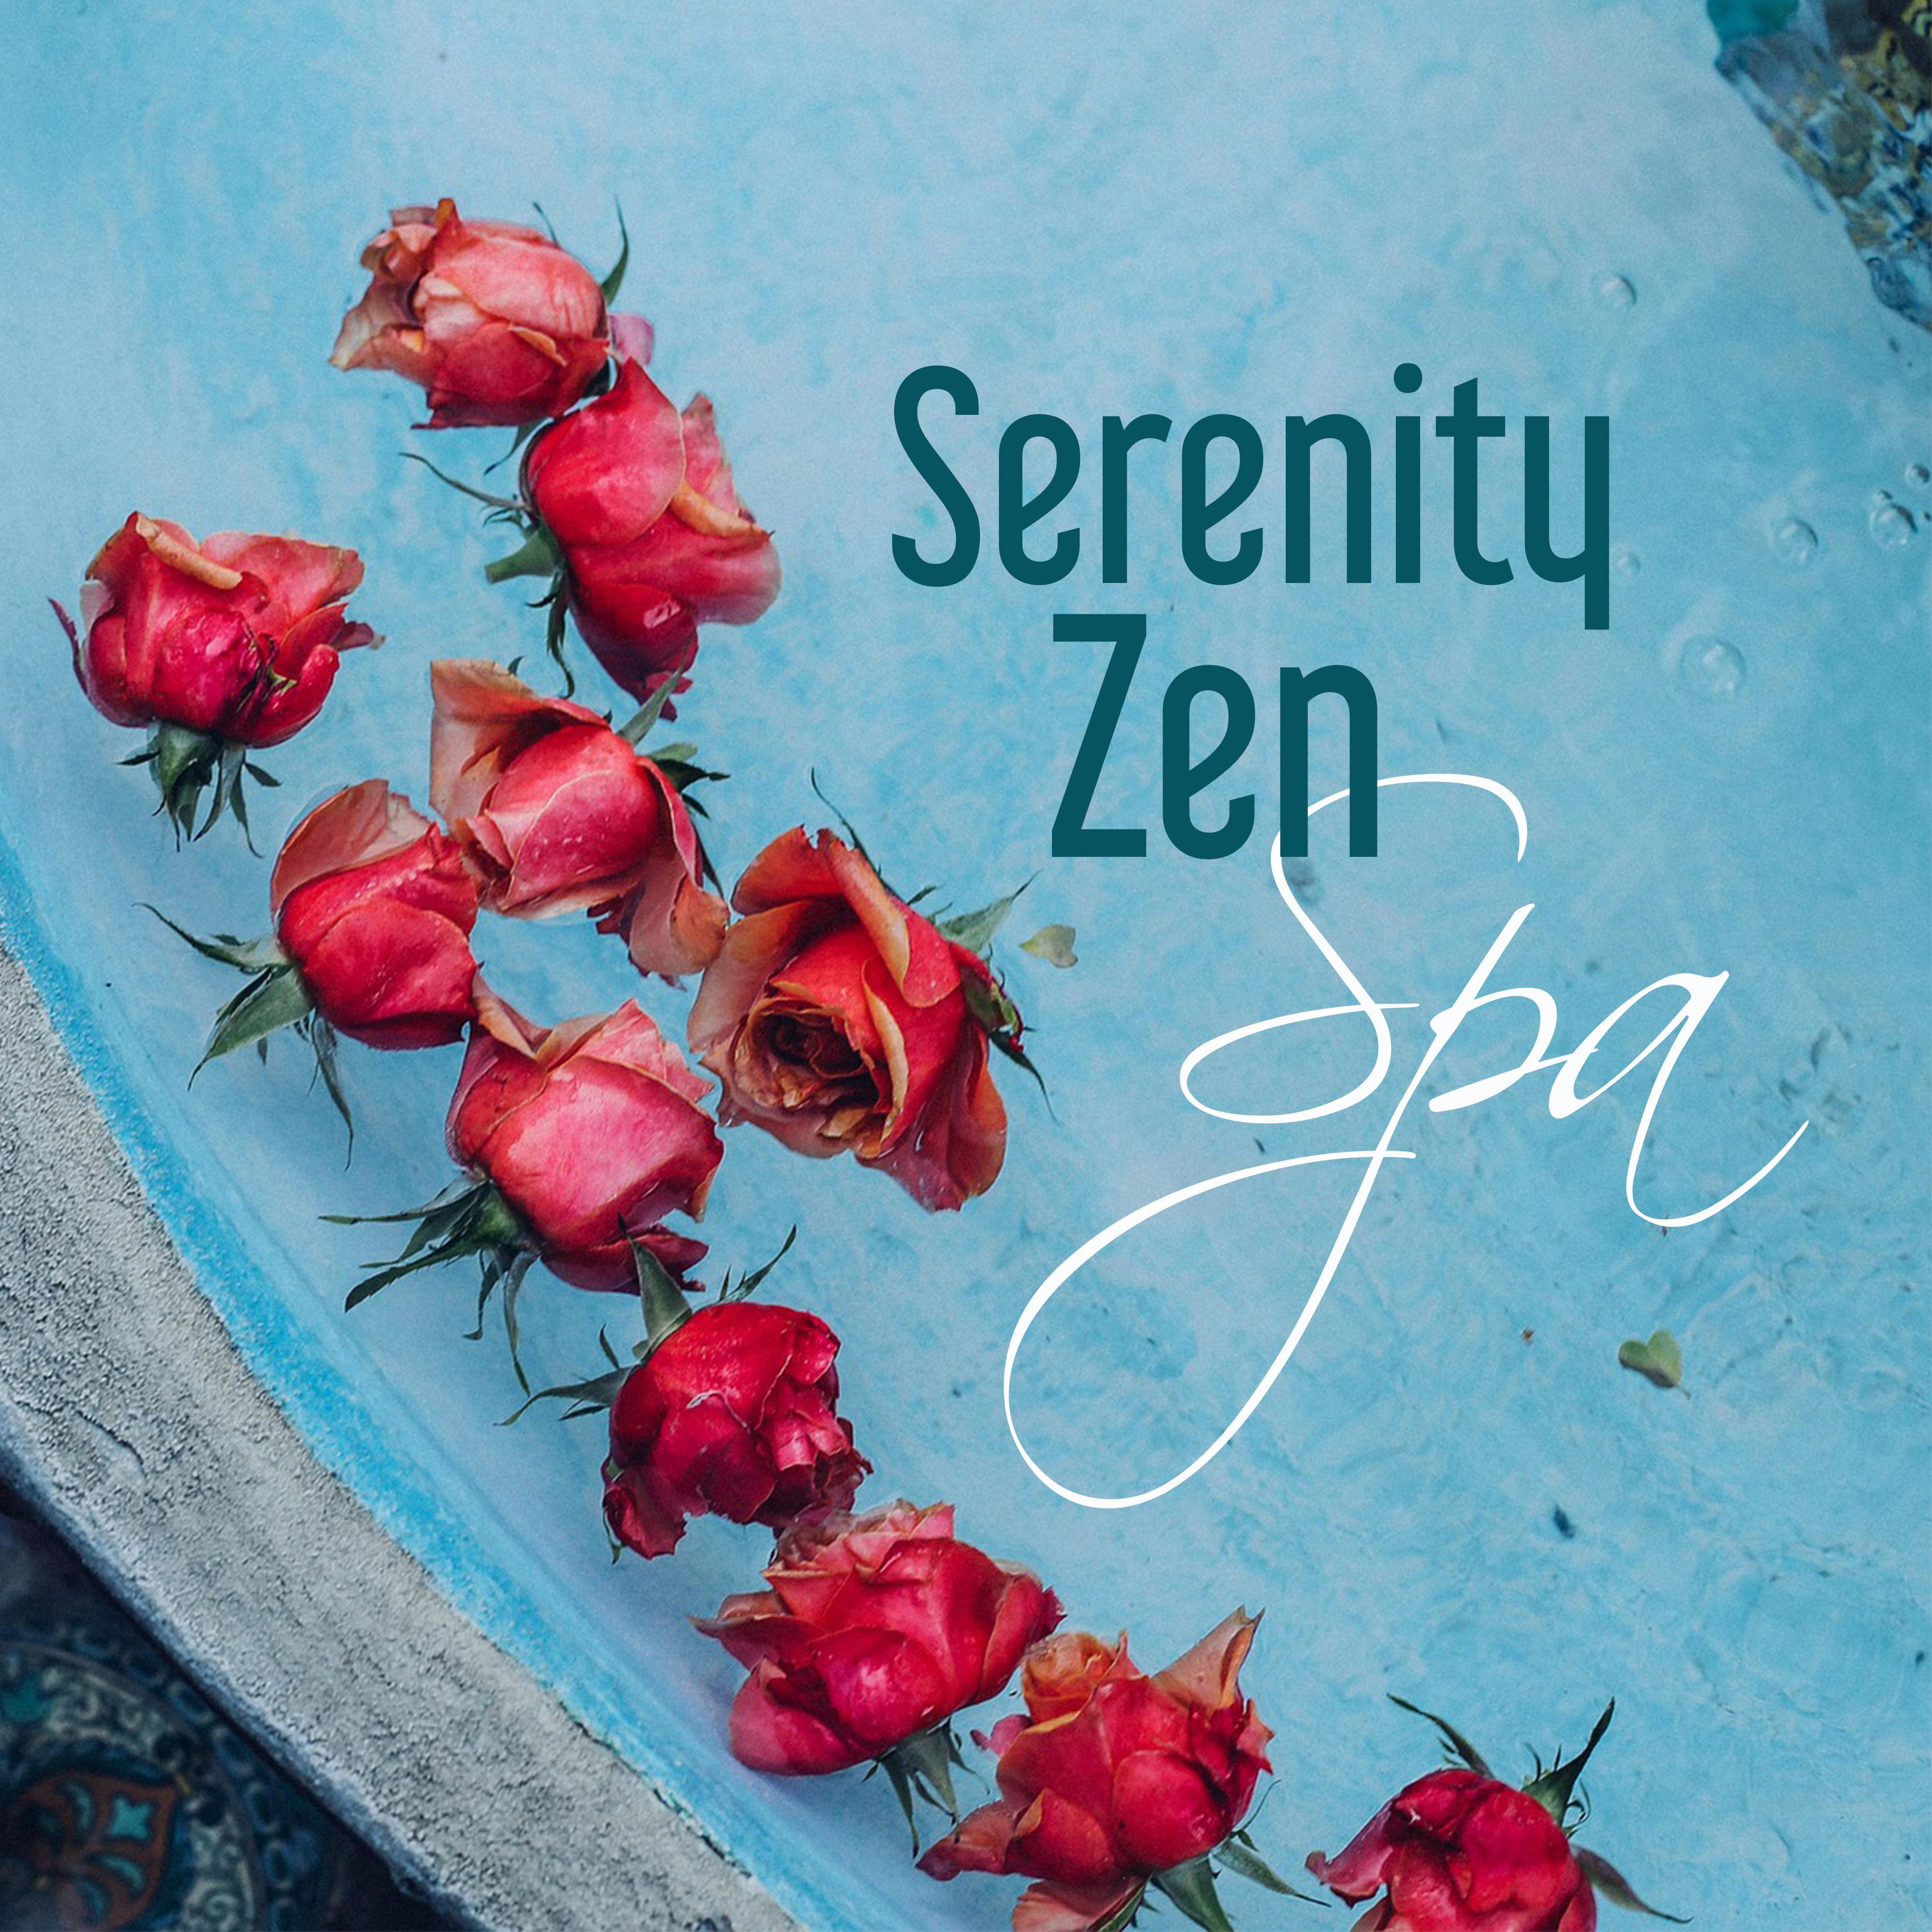 Serenity Zen Spa – Peaceful Music, Pure Massage, Wellness, Nature Sounds to Calm Down, Calmness, Relaxing Waves, Sounds of Sea, Zen